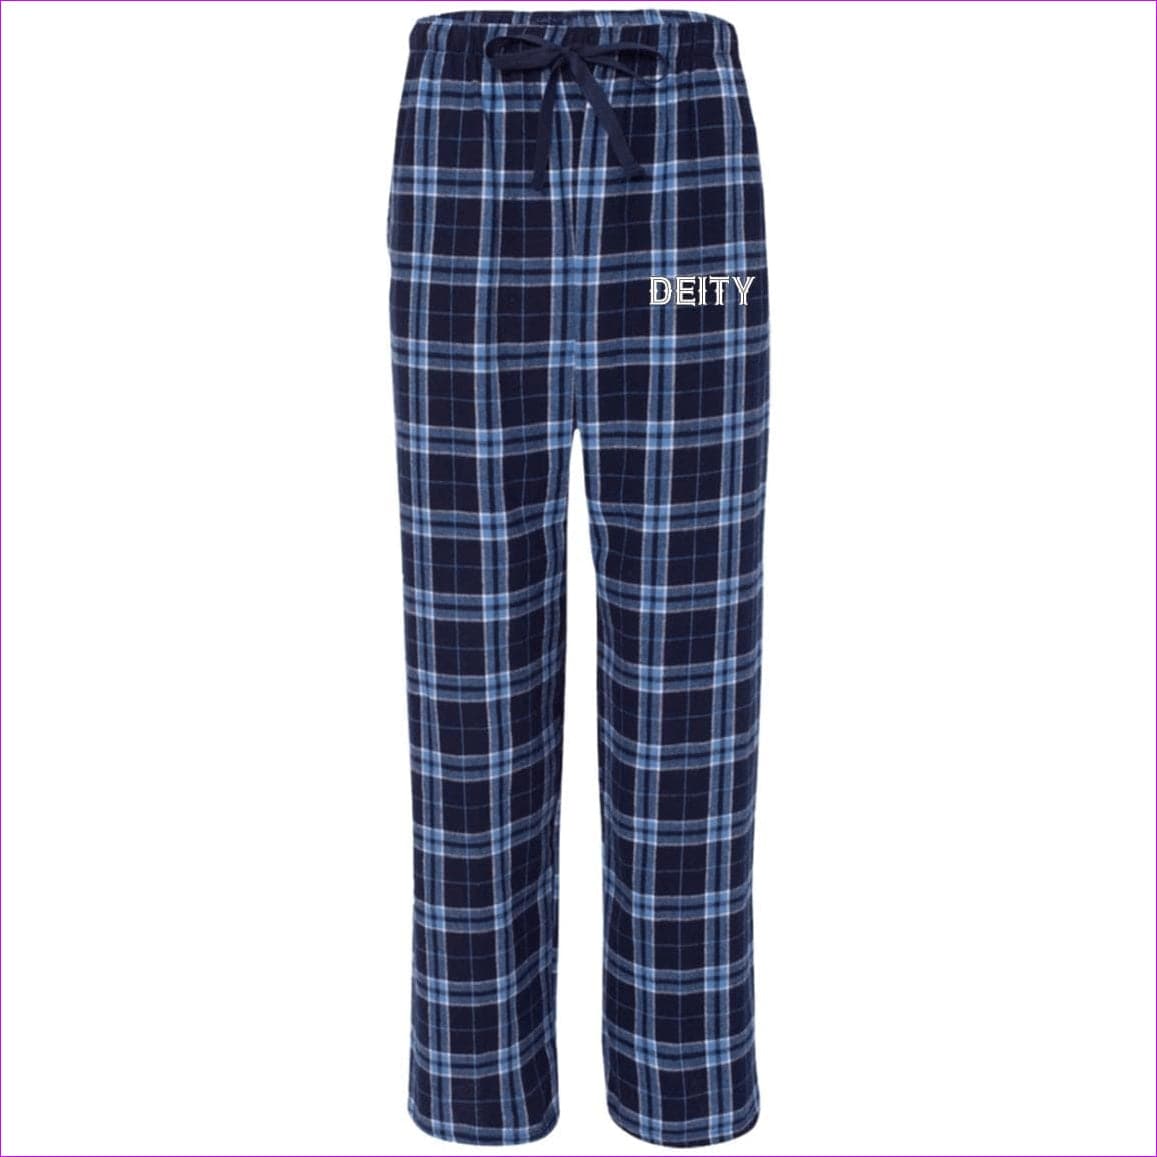 Navy Columbia Blue - Deity Flannel Pants - unisex pajamas Pants at TFC&H Co.